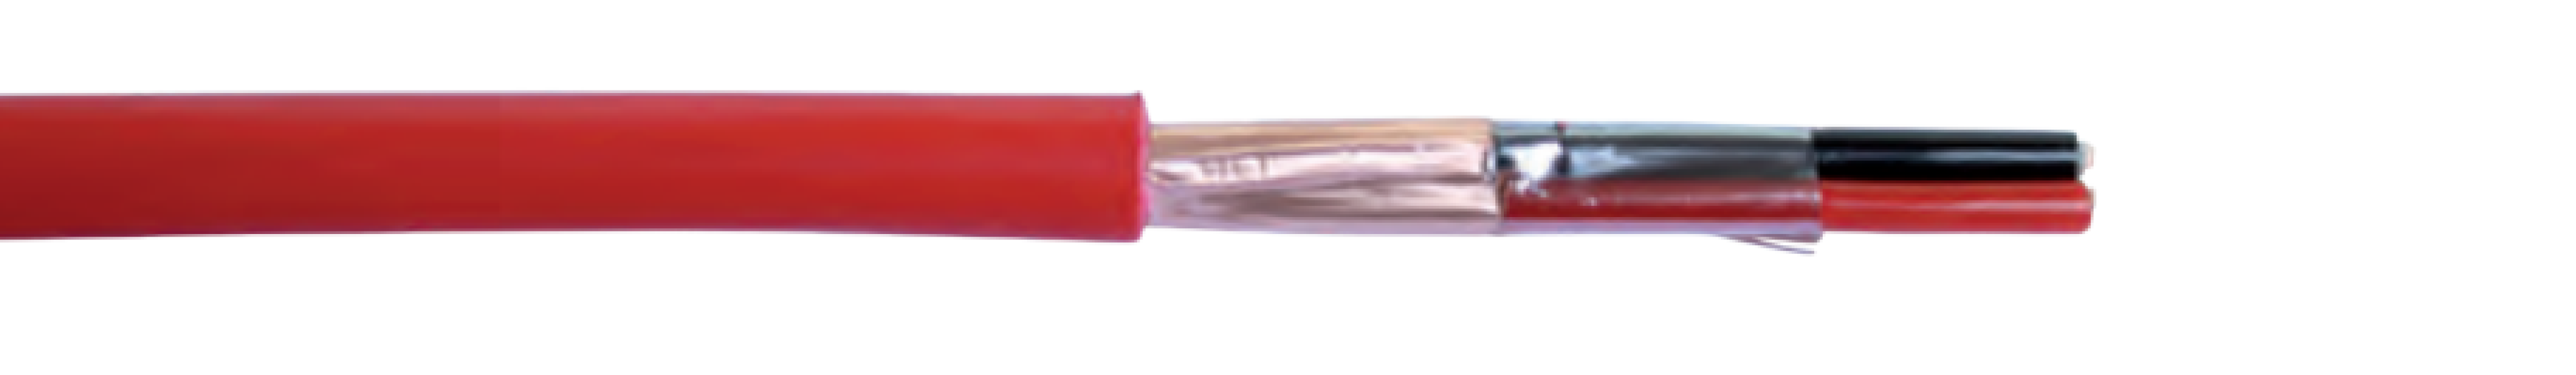 Cavo antincendio Micro Tek diametro esterno 8mm rosso vendita al metro - FRT2150XXX-E 01